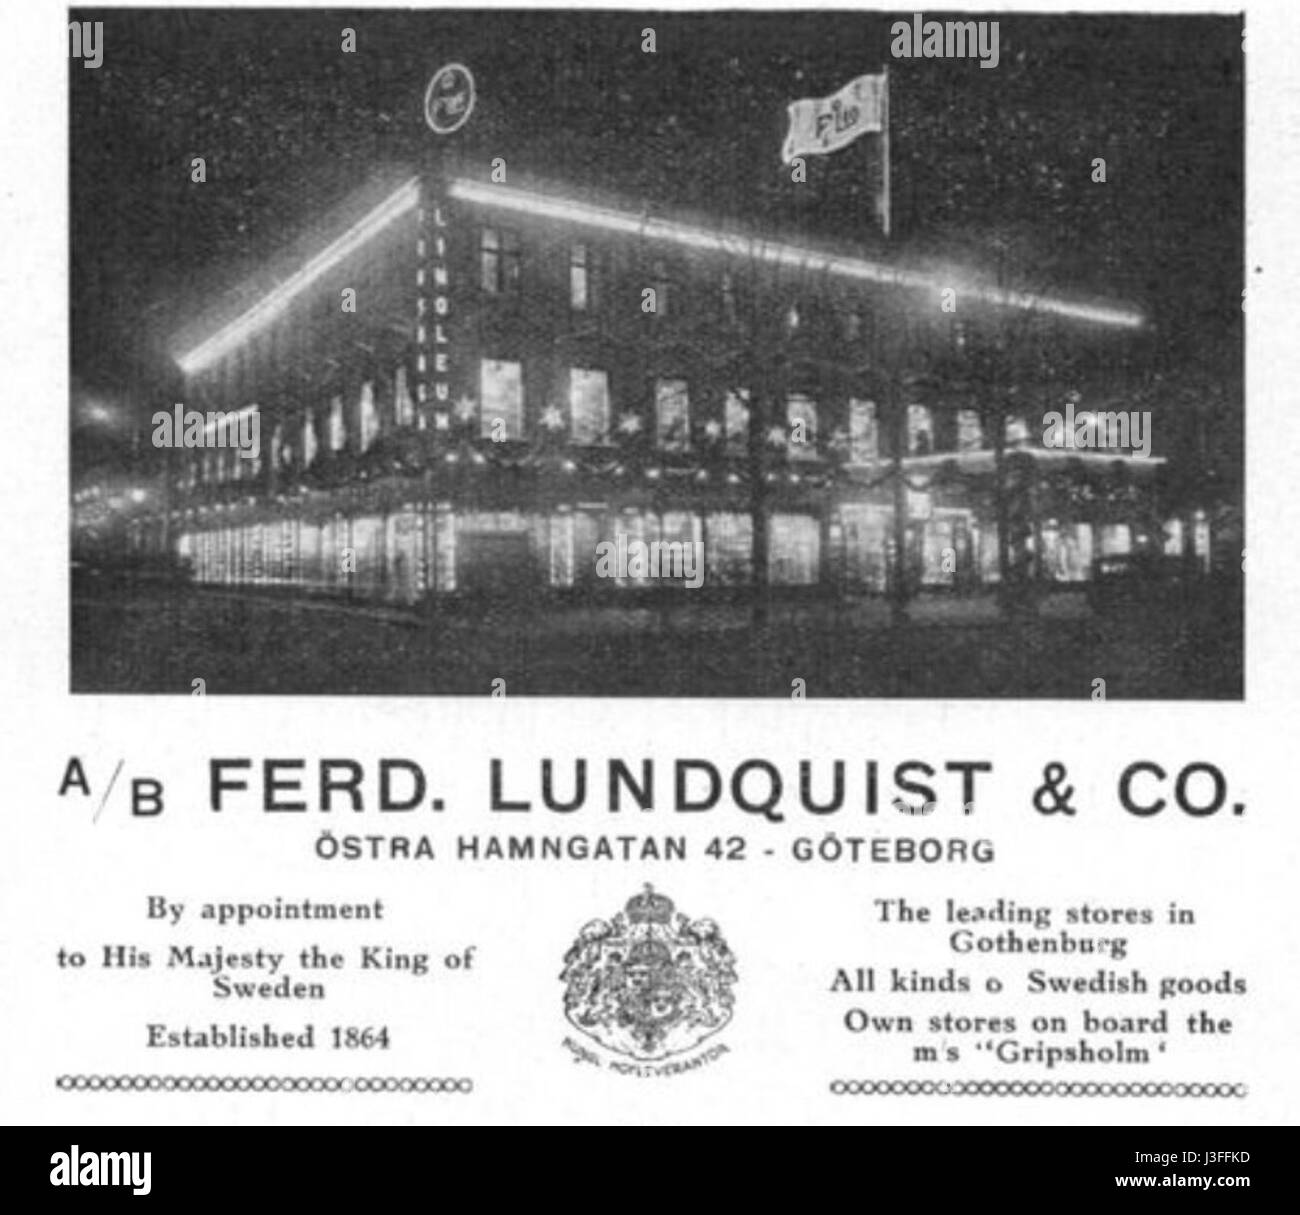 Ferd lundquist ad 1930 Stock Photo